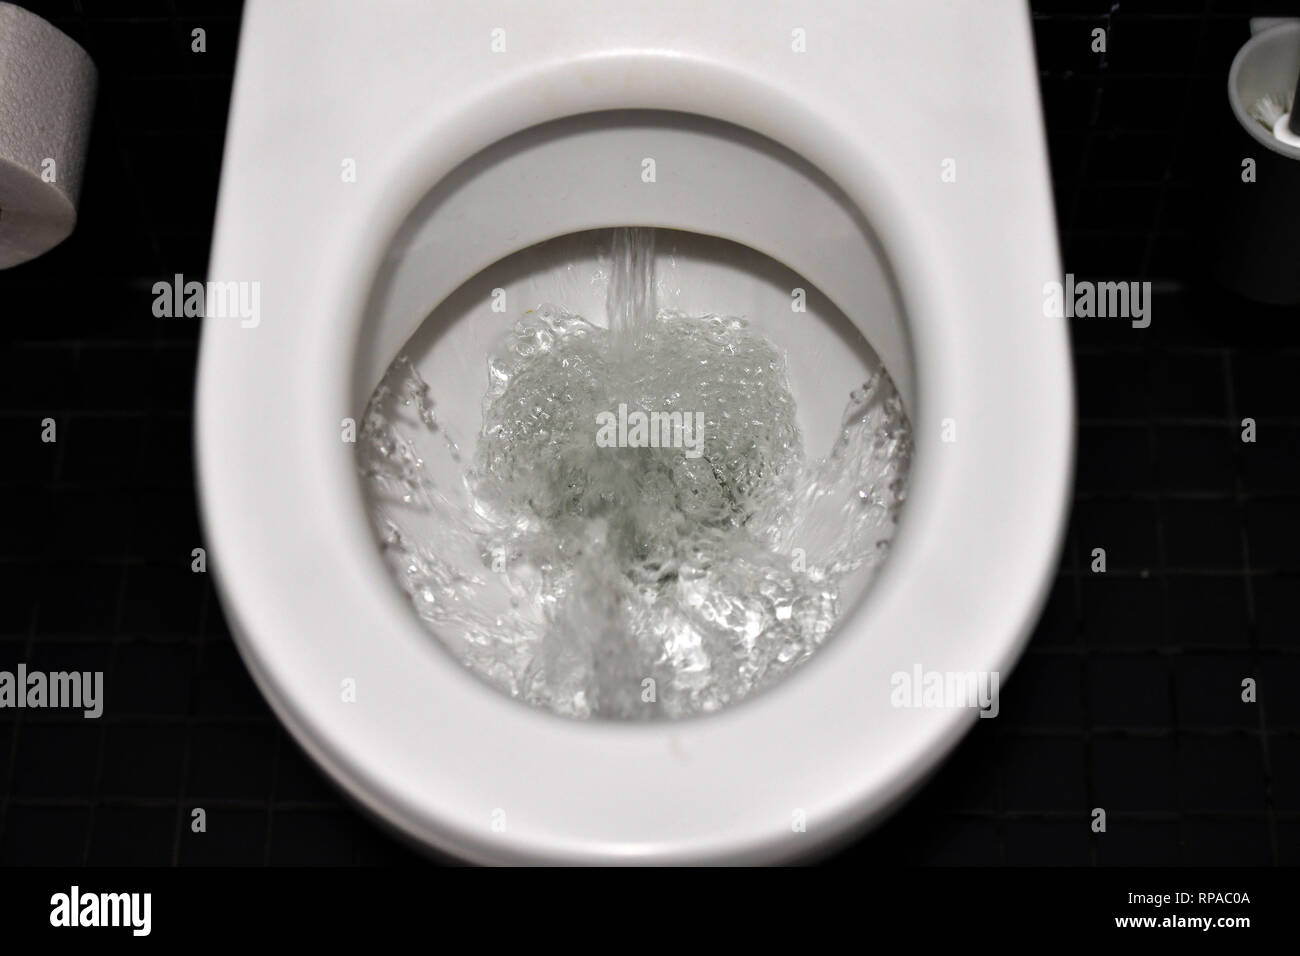 Munich, Deutschland. 14th Feb, 2019. Water flushing in a toilet bowl, toilet, toilet, rinse, down flush, shoer, toilet., Usage worldwide Credit: dpa/Alamy Live News Stock Photo